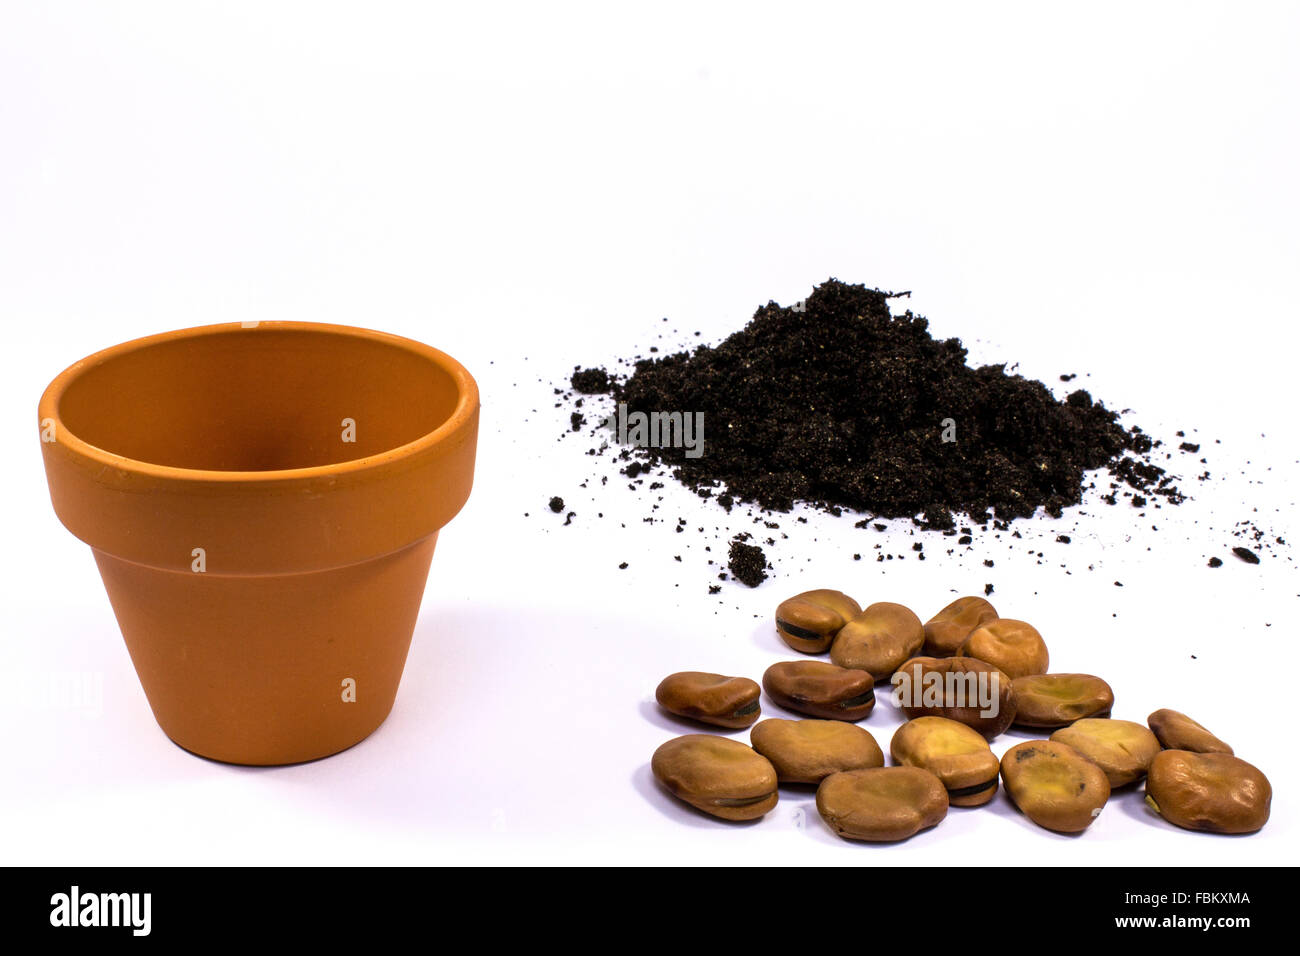 seed, compost, beans, plant pot, plants, soil, Stock Photo